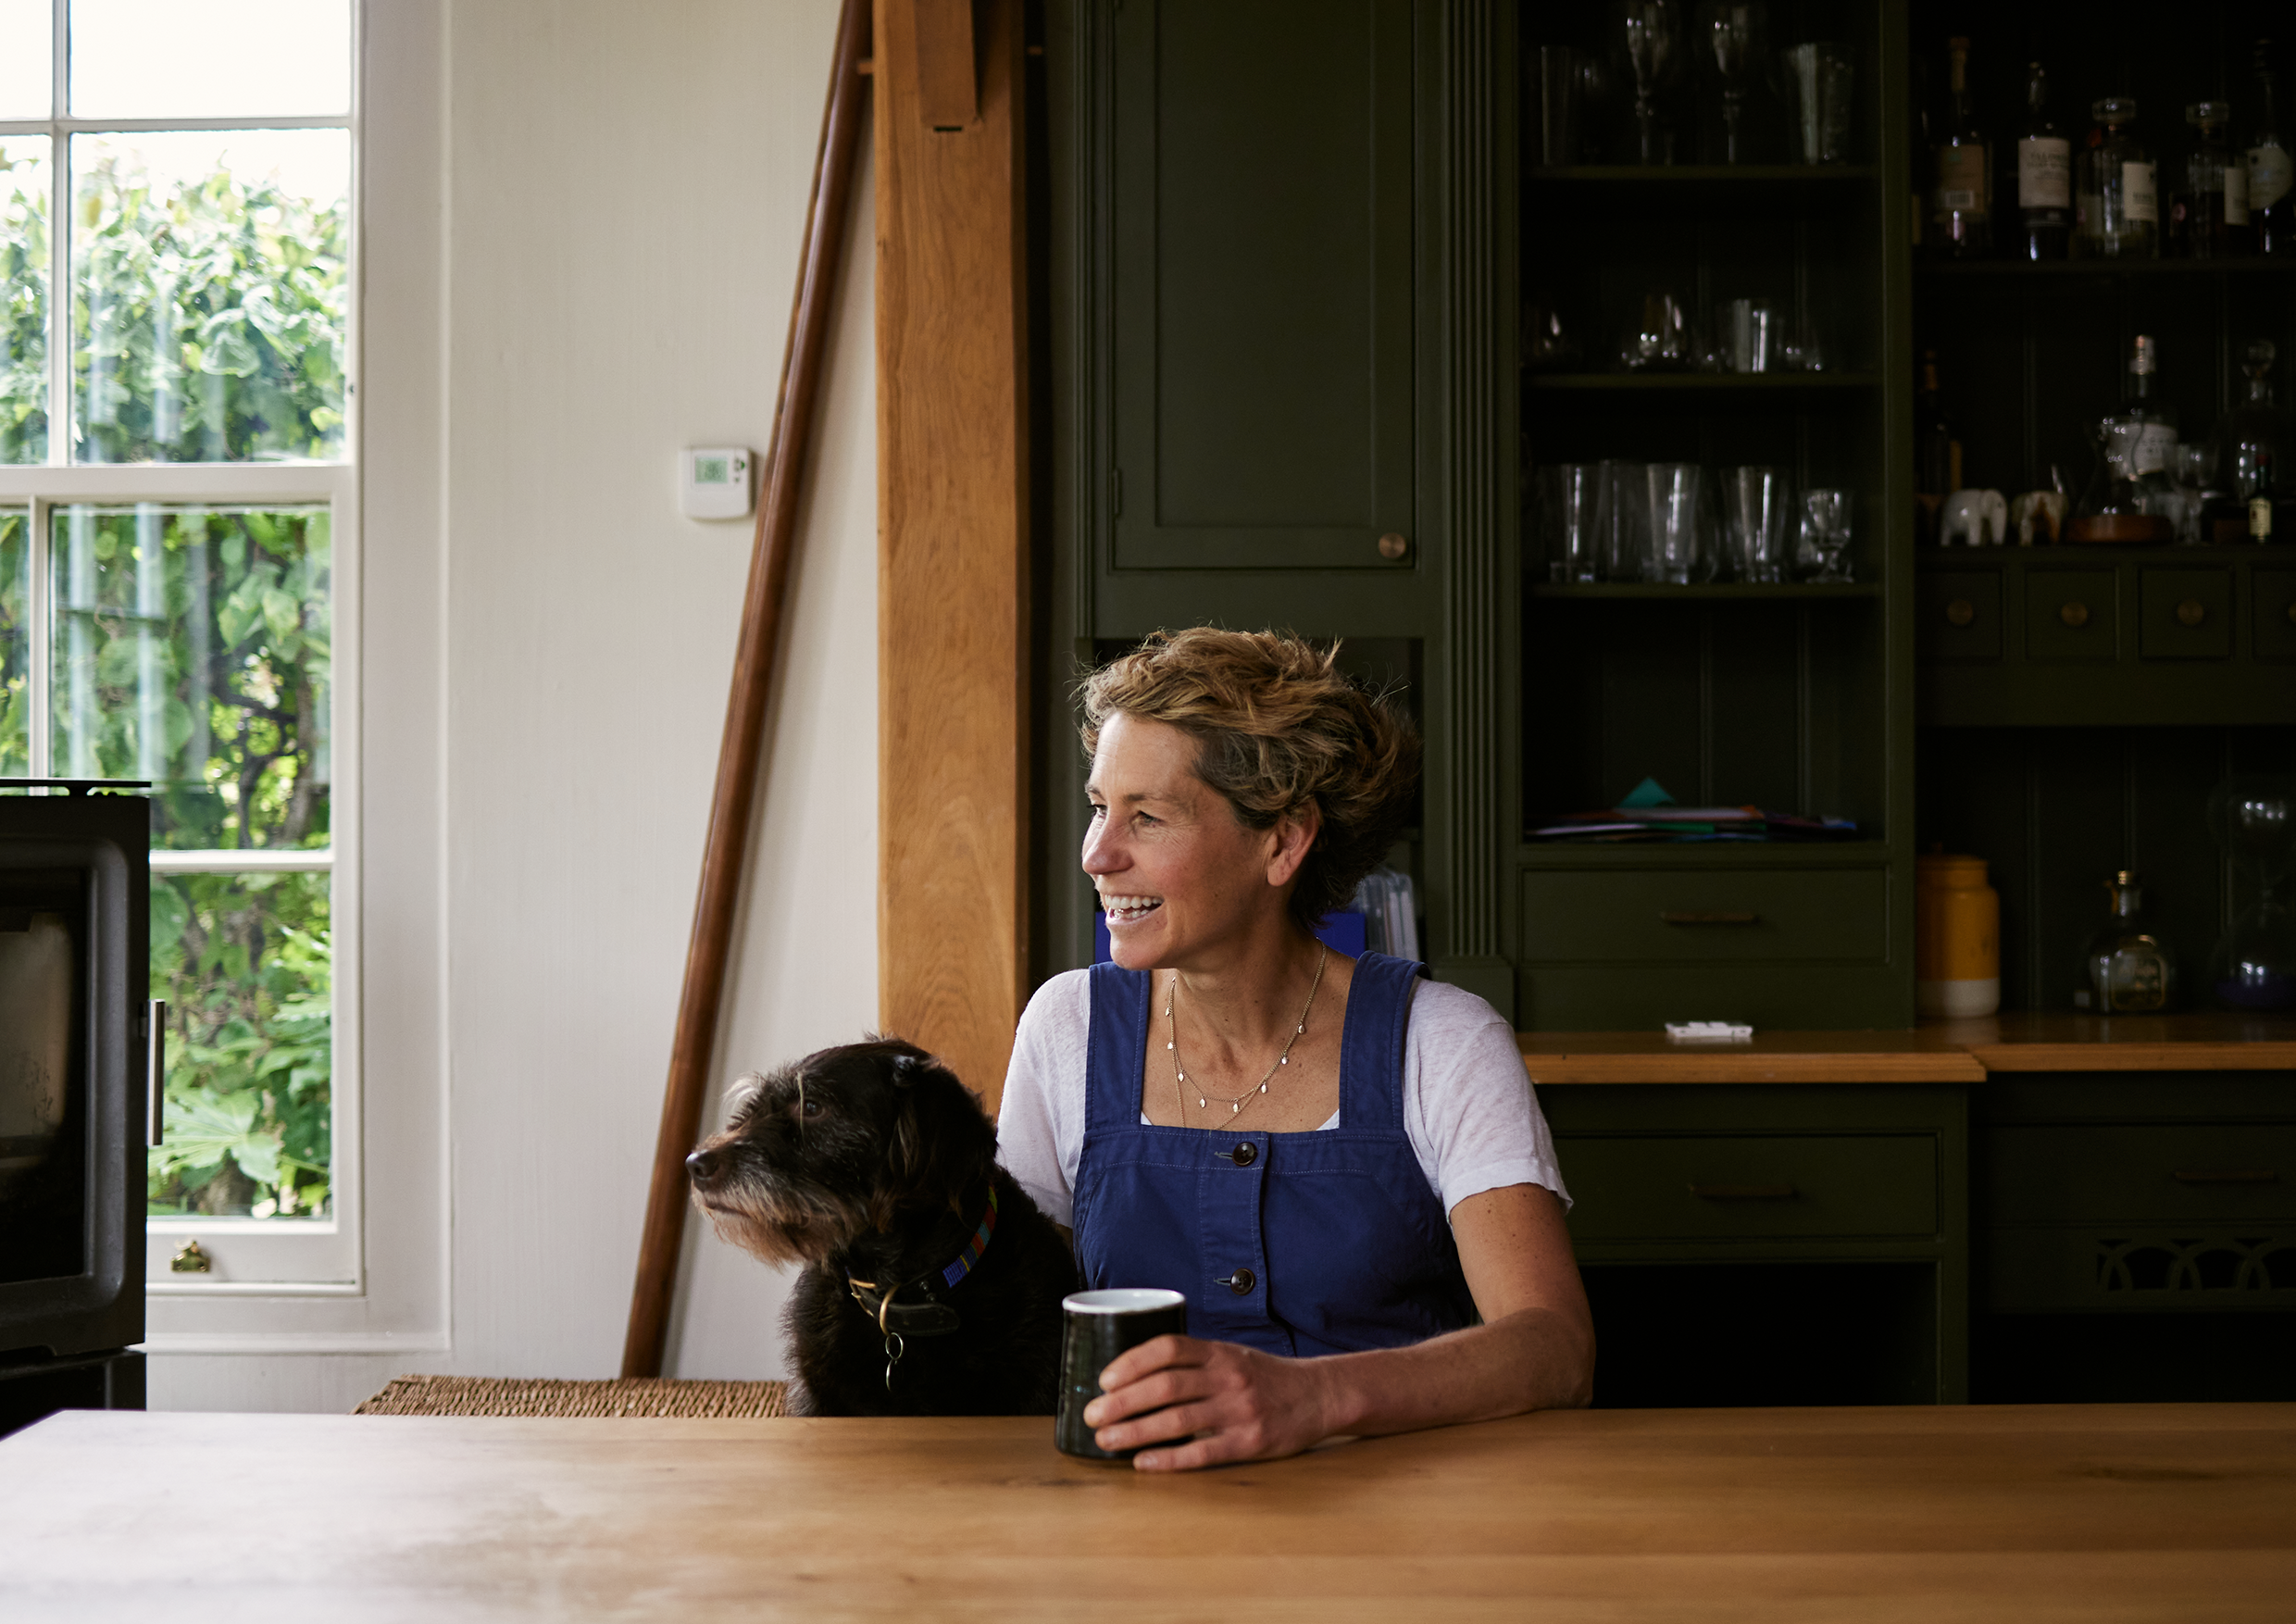 Food writer Tara Wigley at at table with her dog